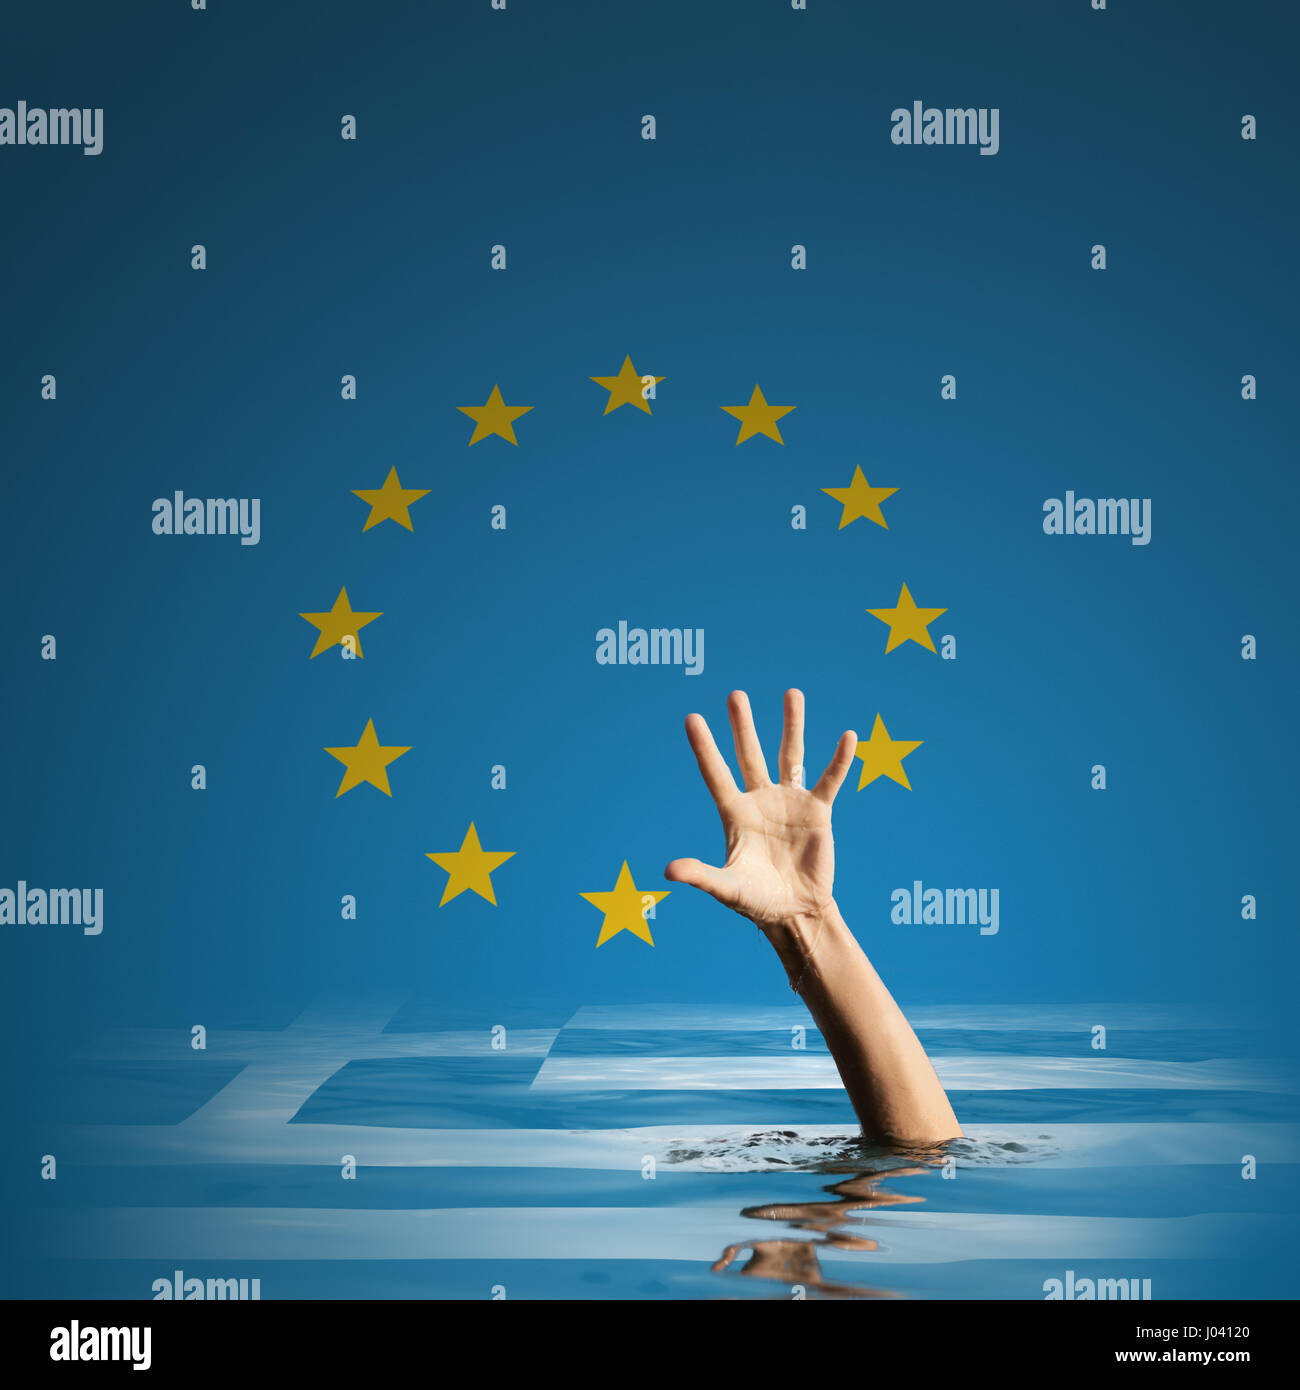 Greece debt crisis in European Union 3d illustration Stock Photo